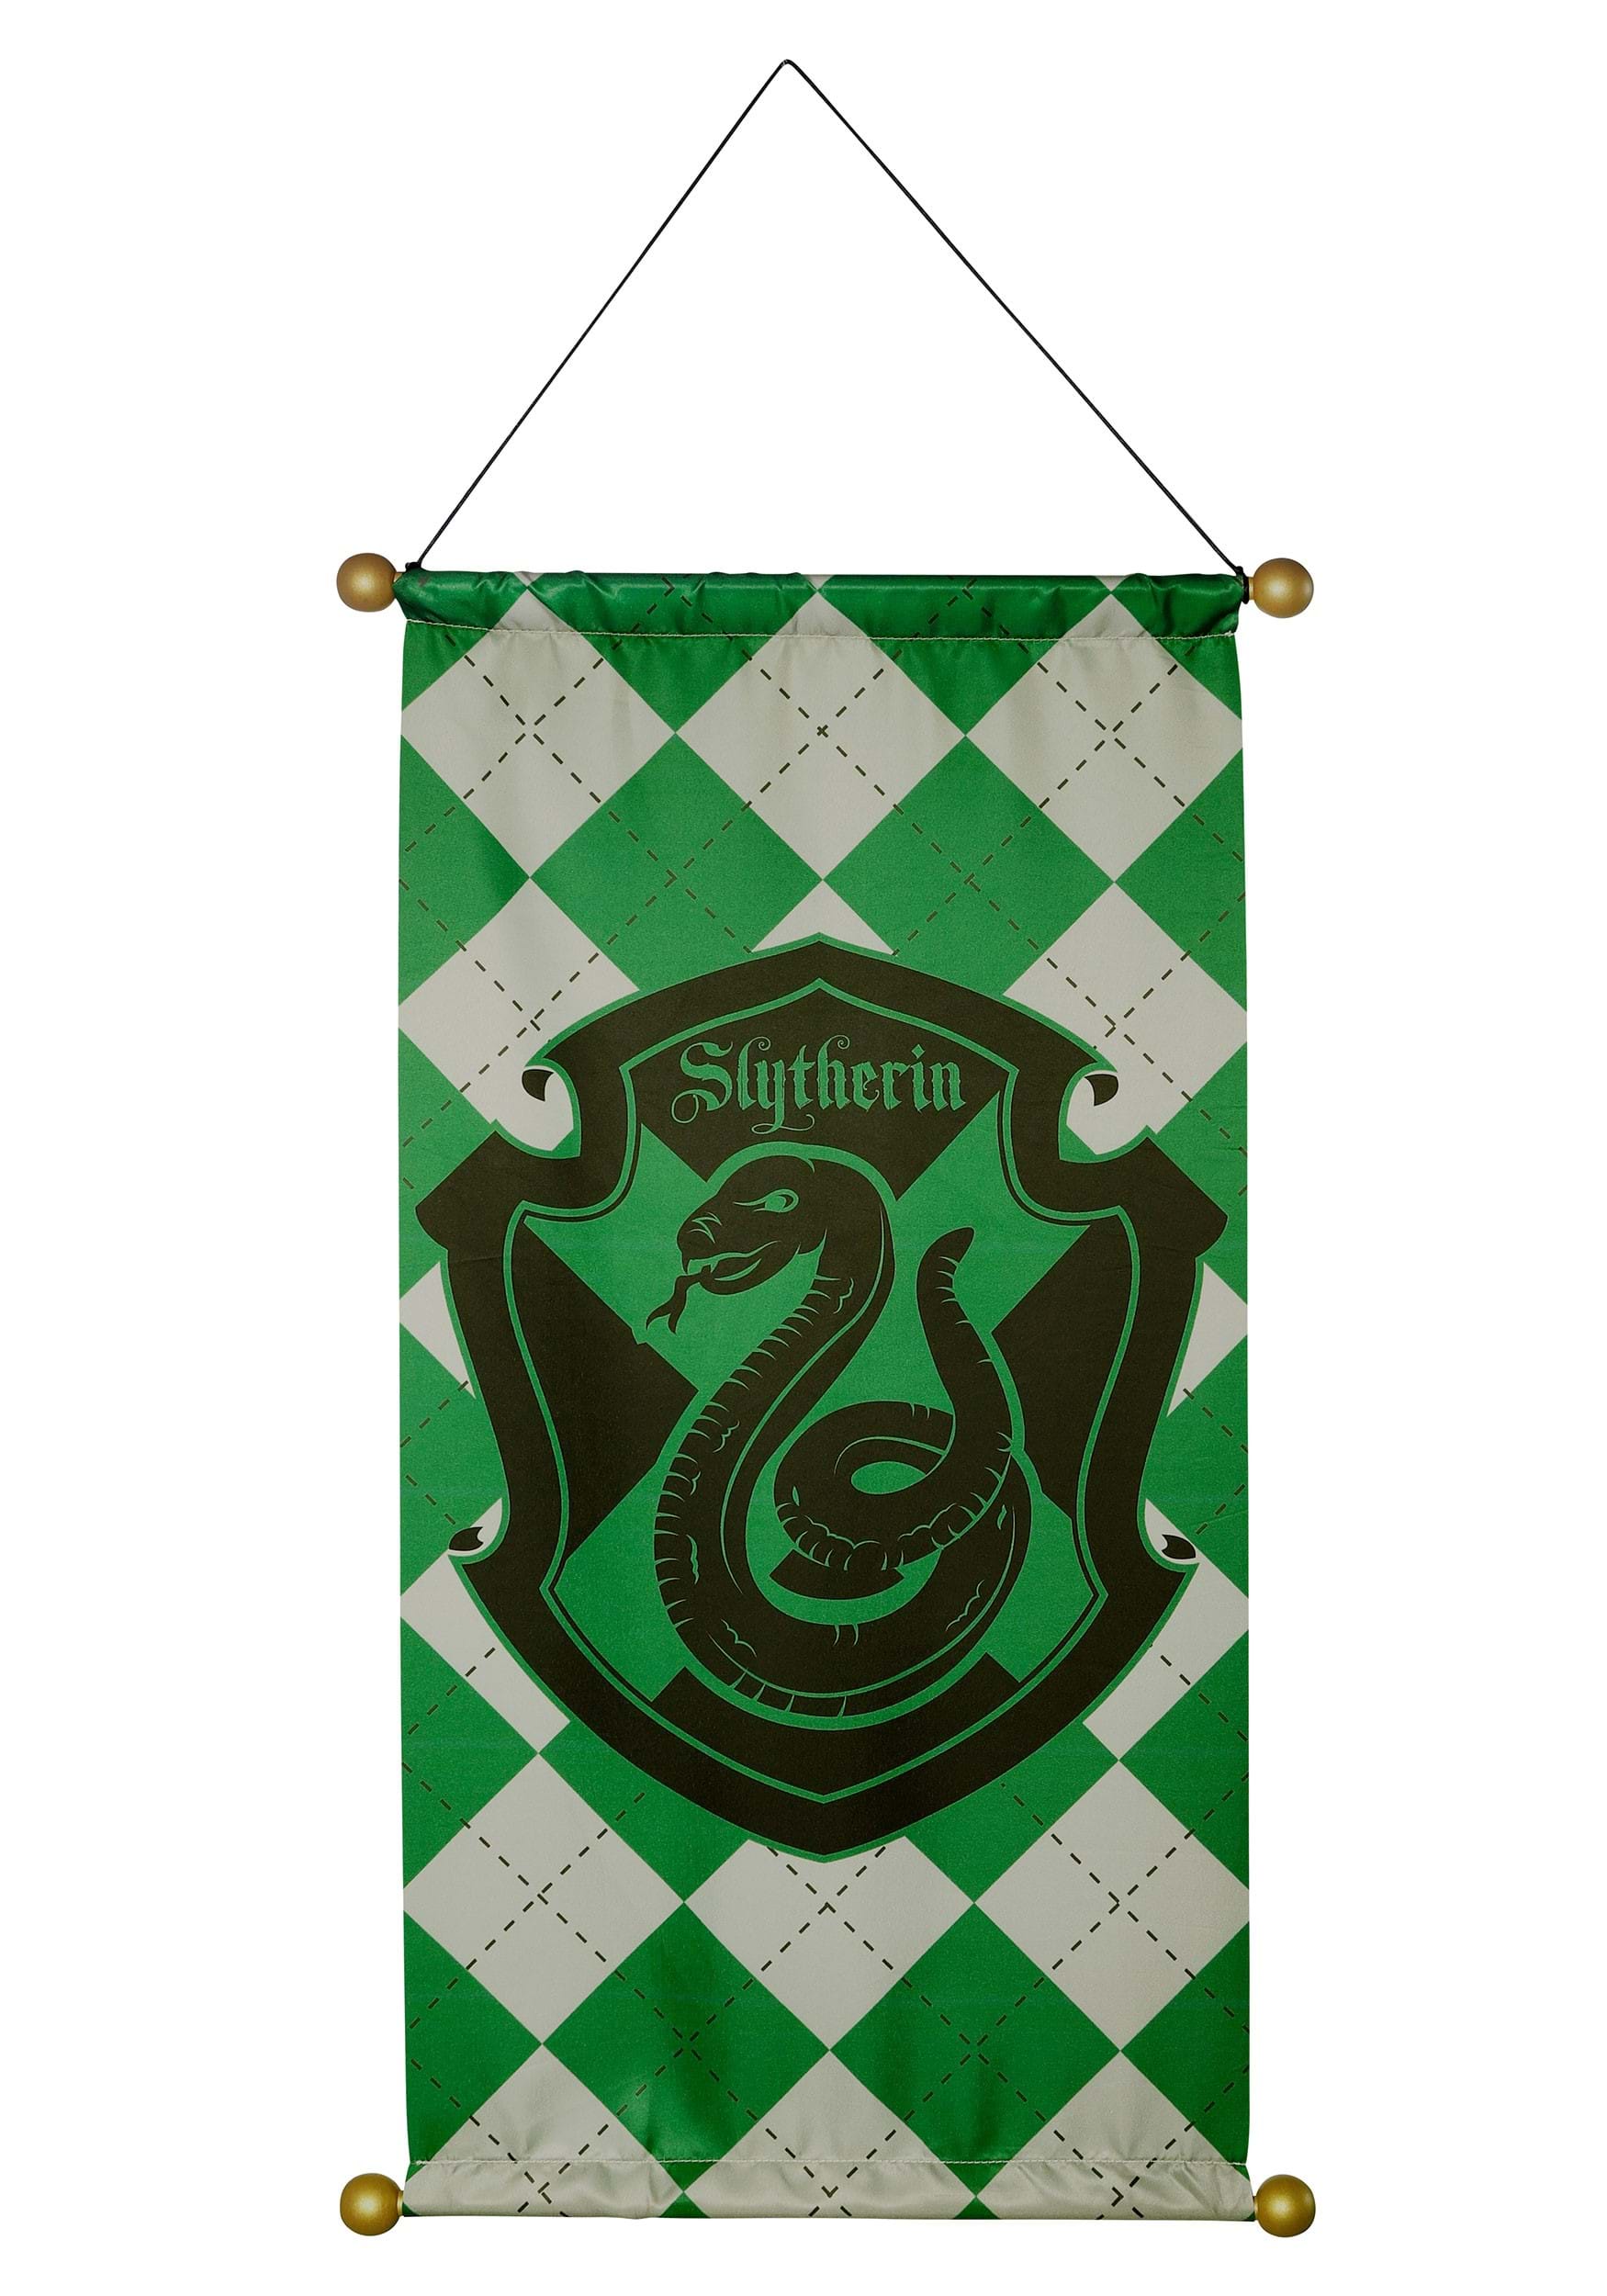 Hogwarts Slytherin Shirt Tumbler, Personalized Harry Potter Gifts